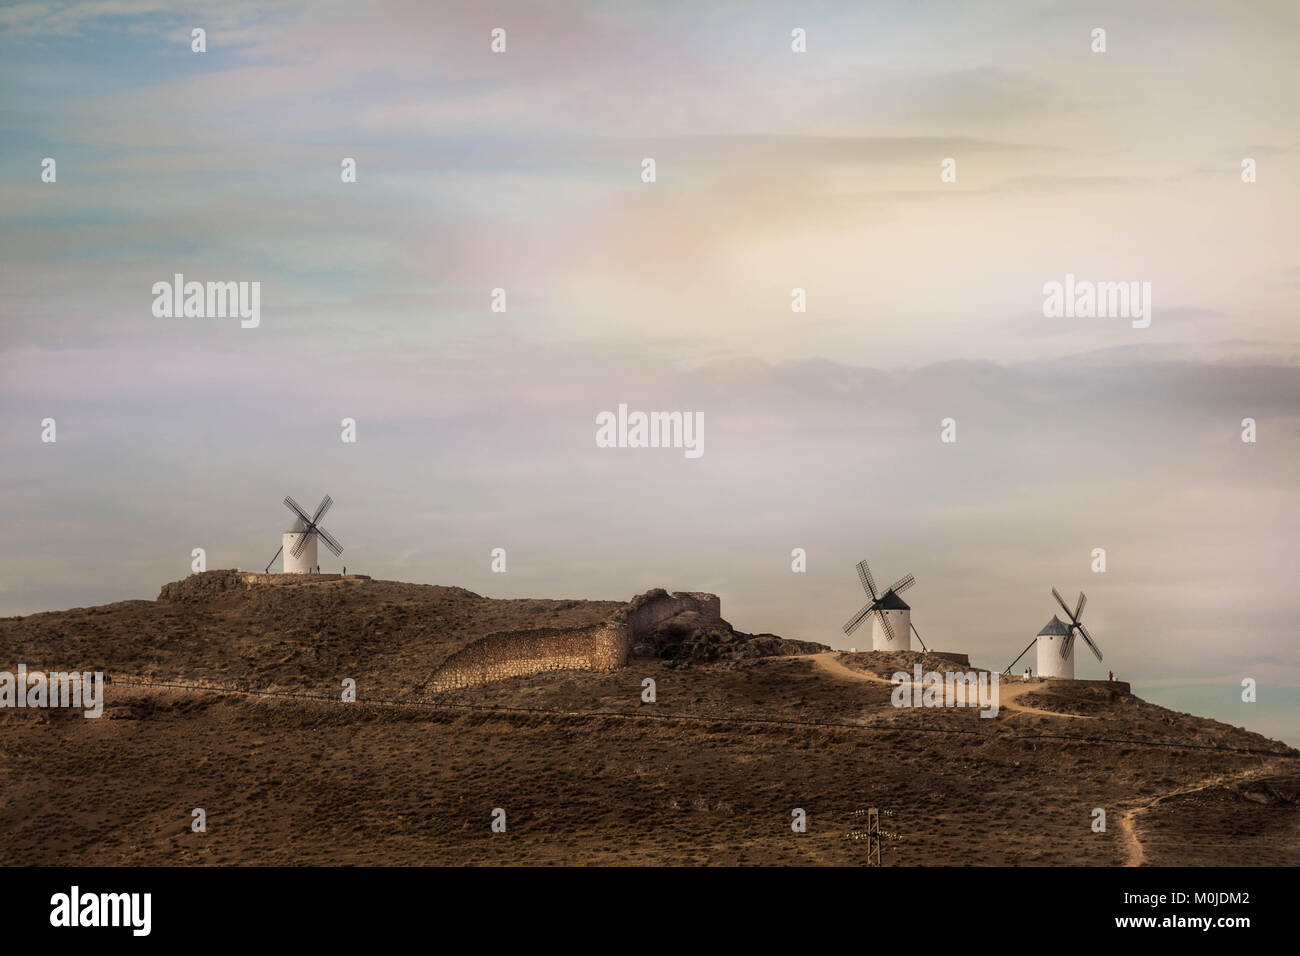 Windmills hill, Don quixote route in Consuegra, Toledo provinde, Spain Stock Photo